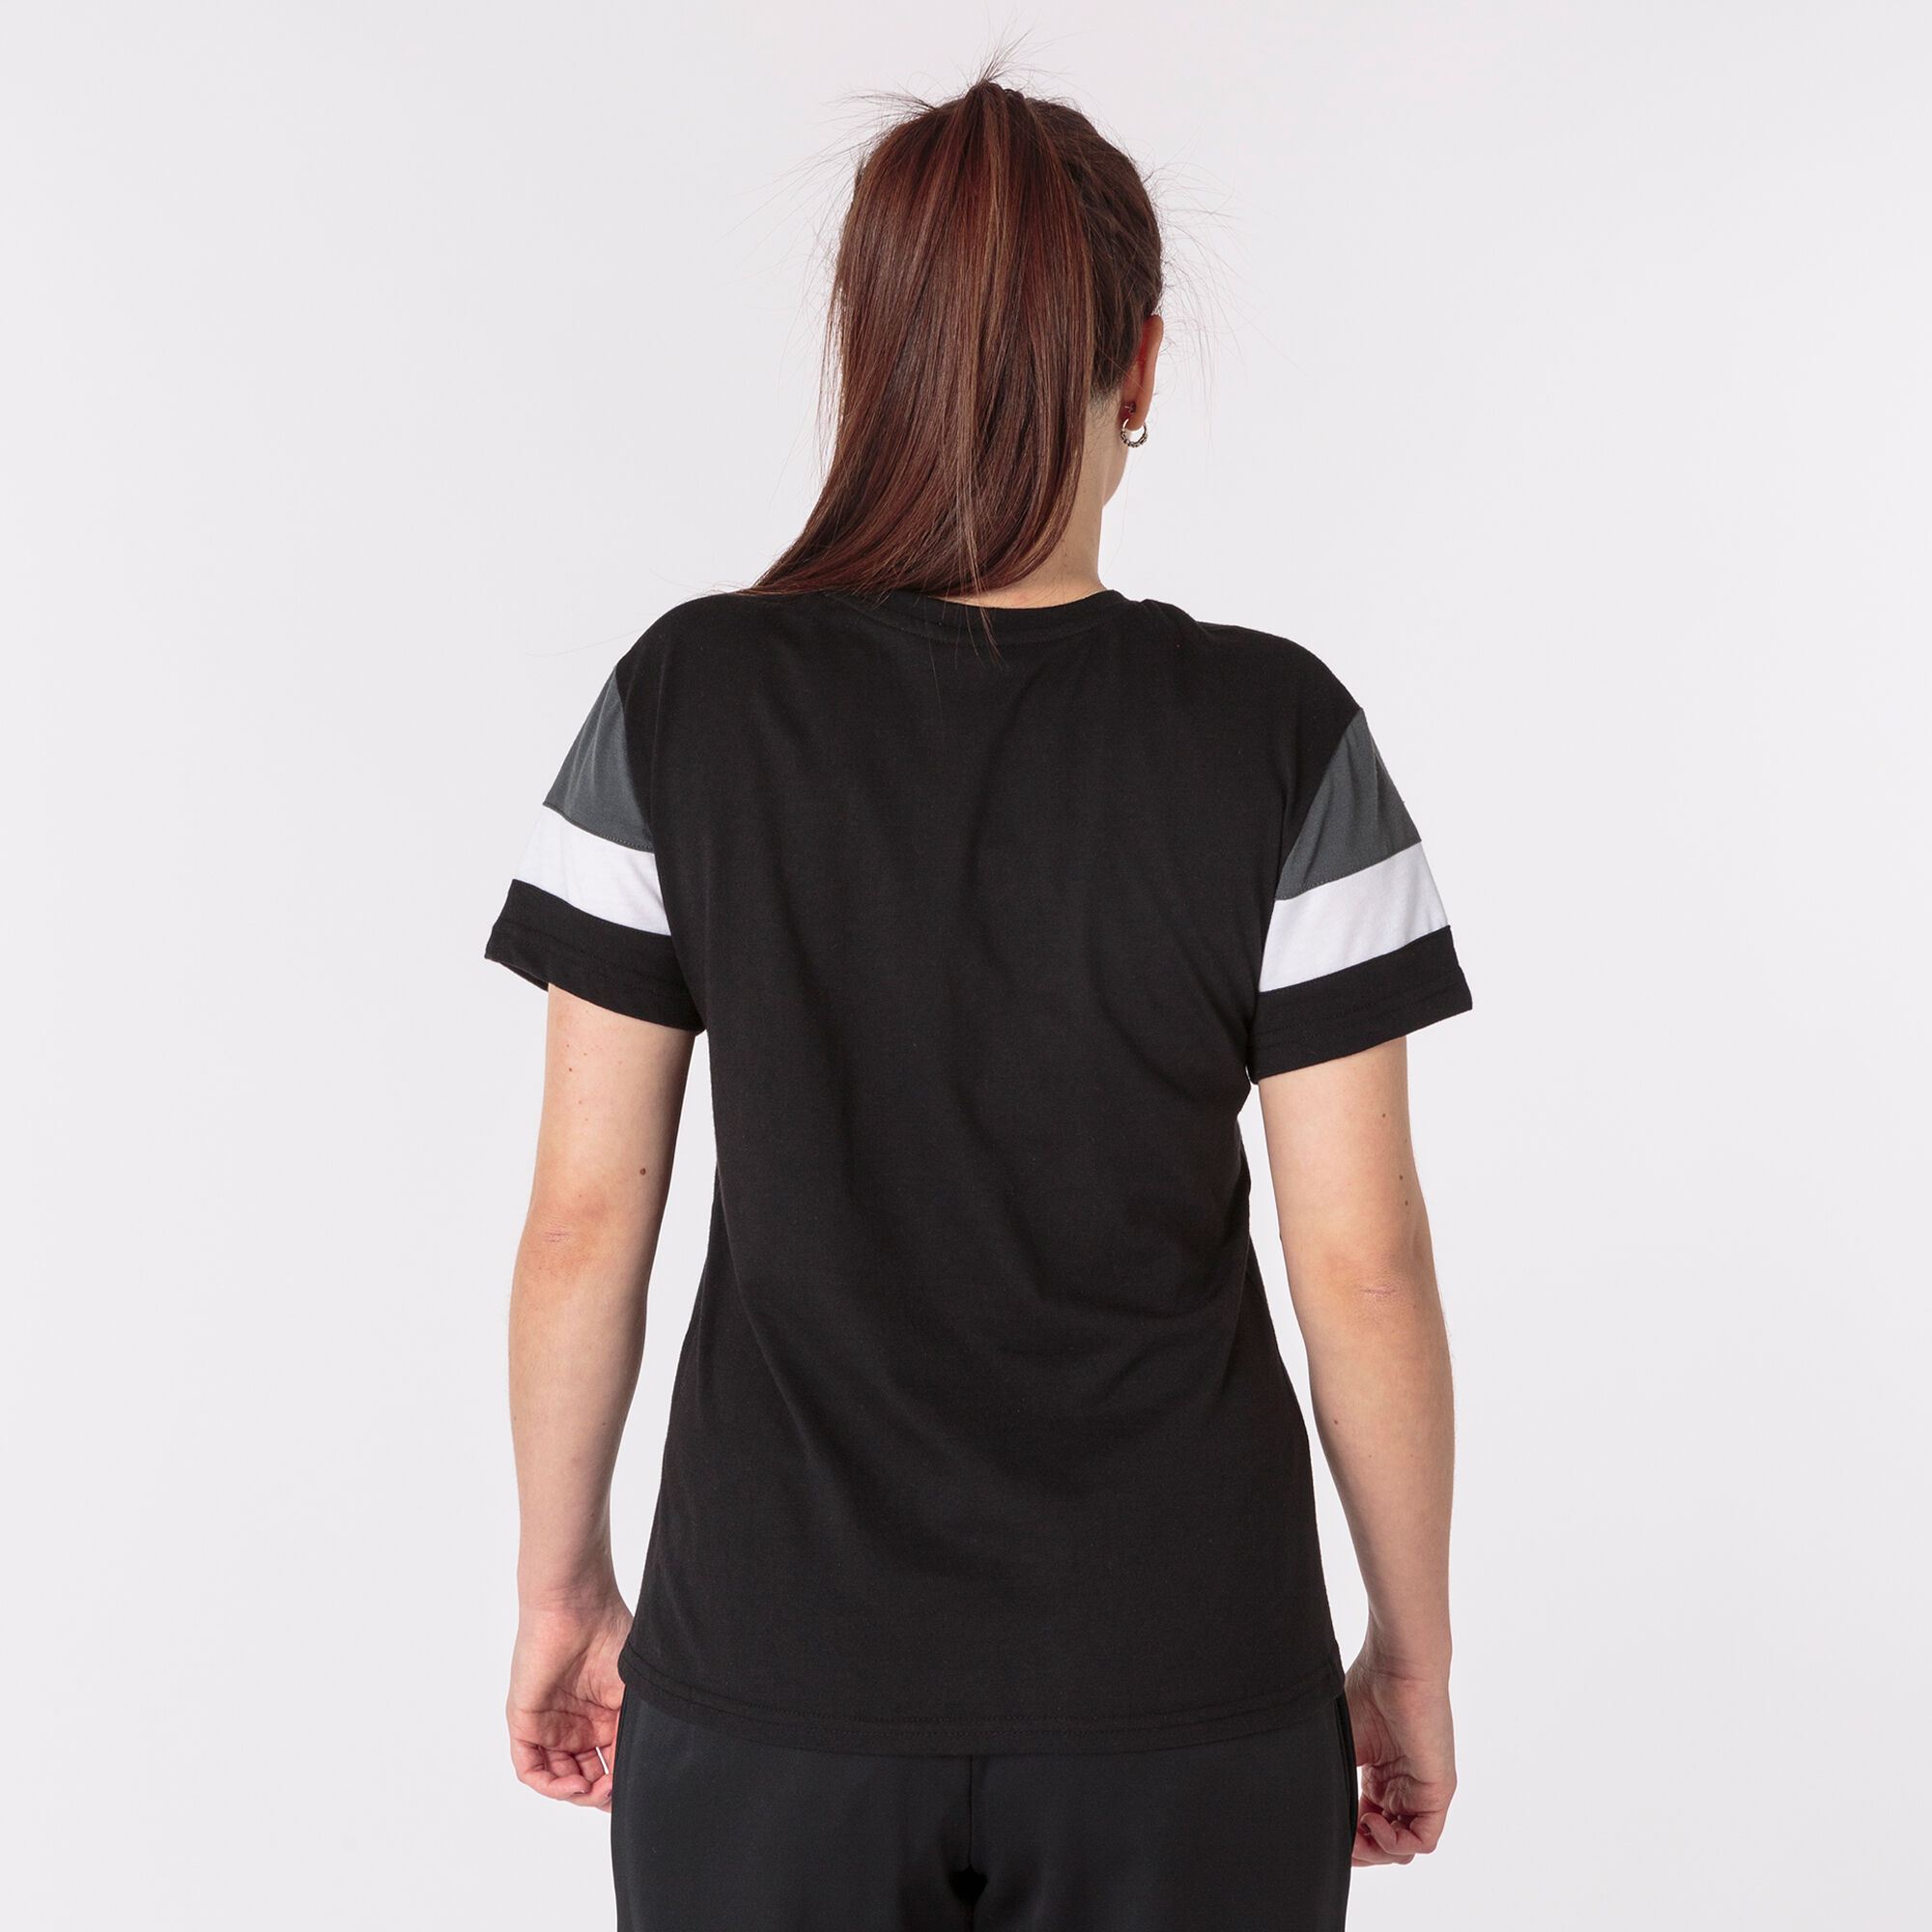 Camiseta manga corta mujer Crew IV negro antracita blanco